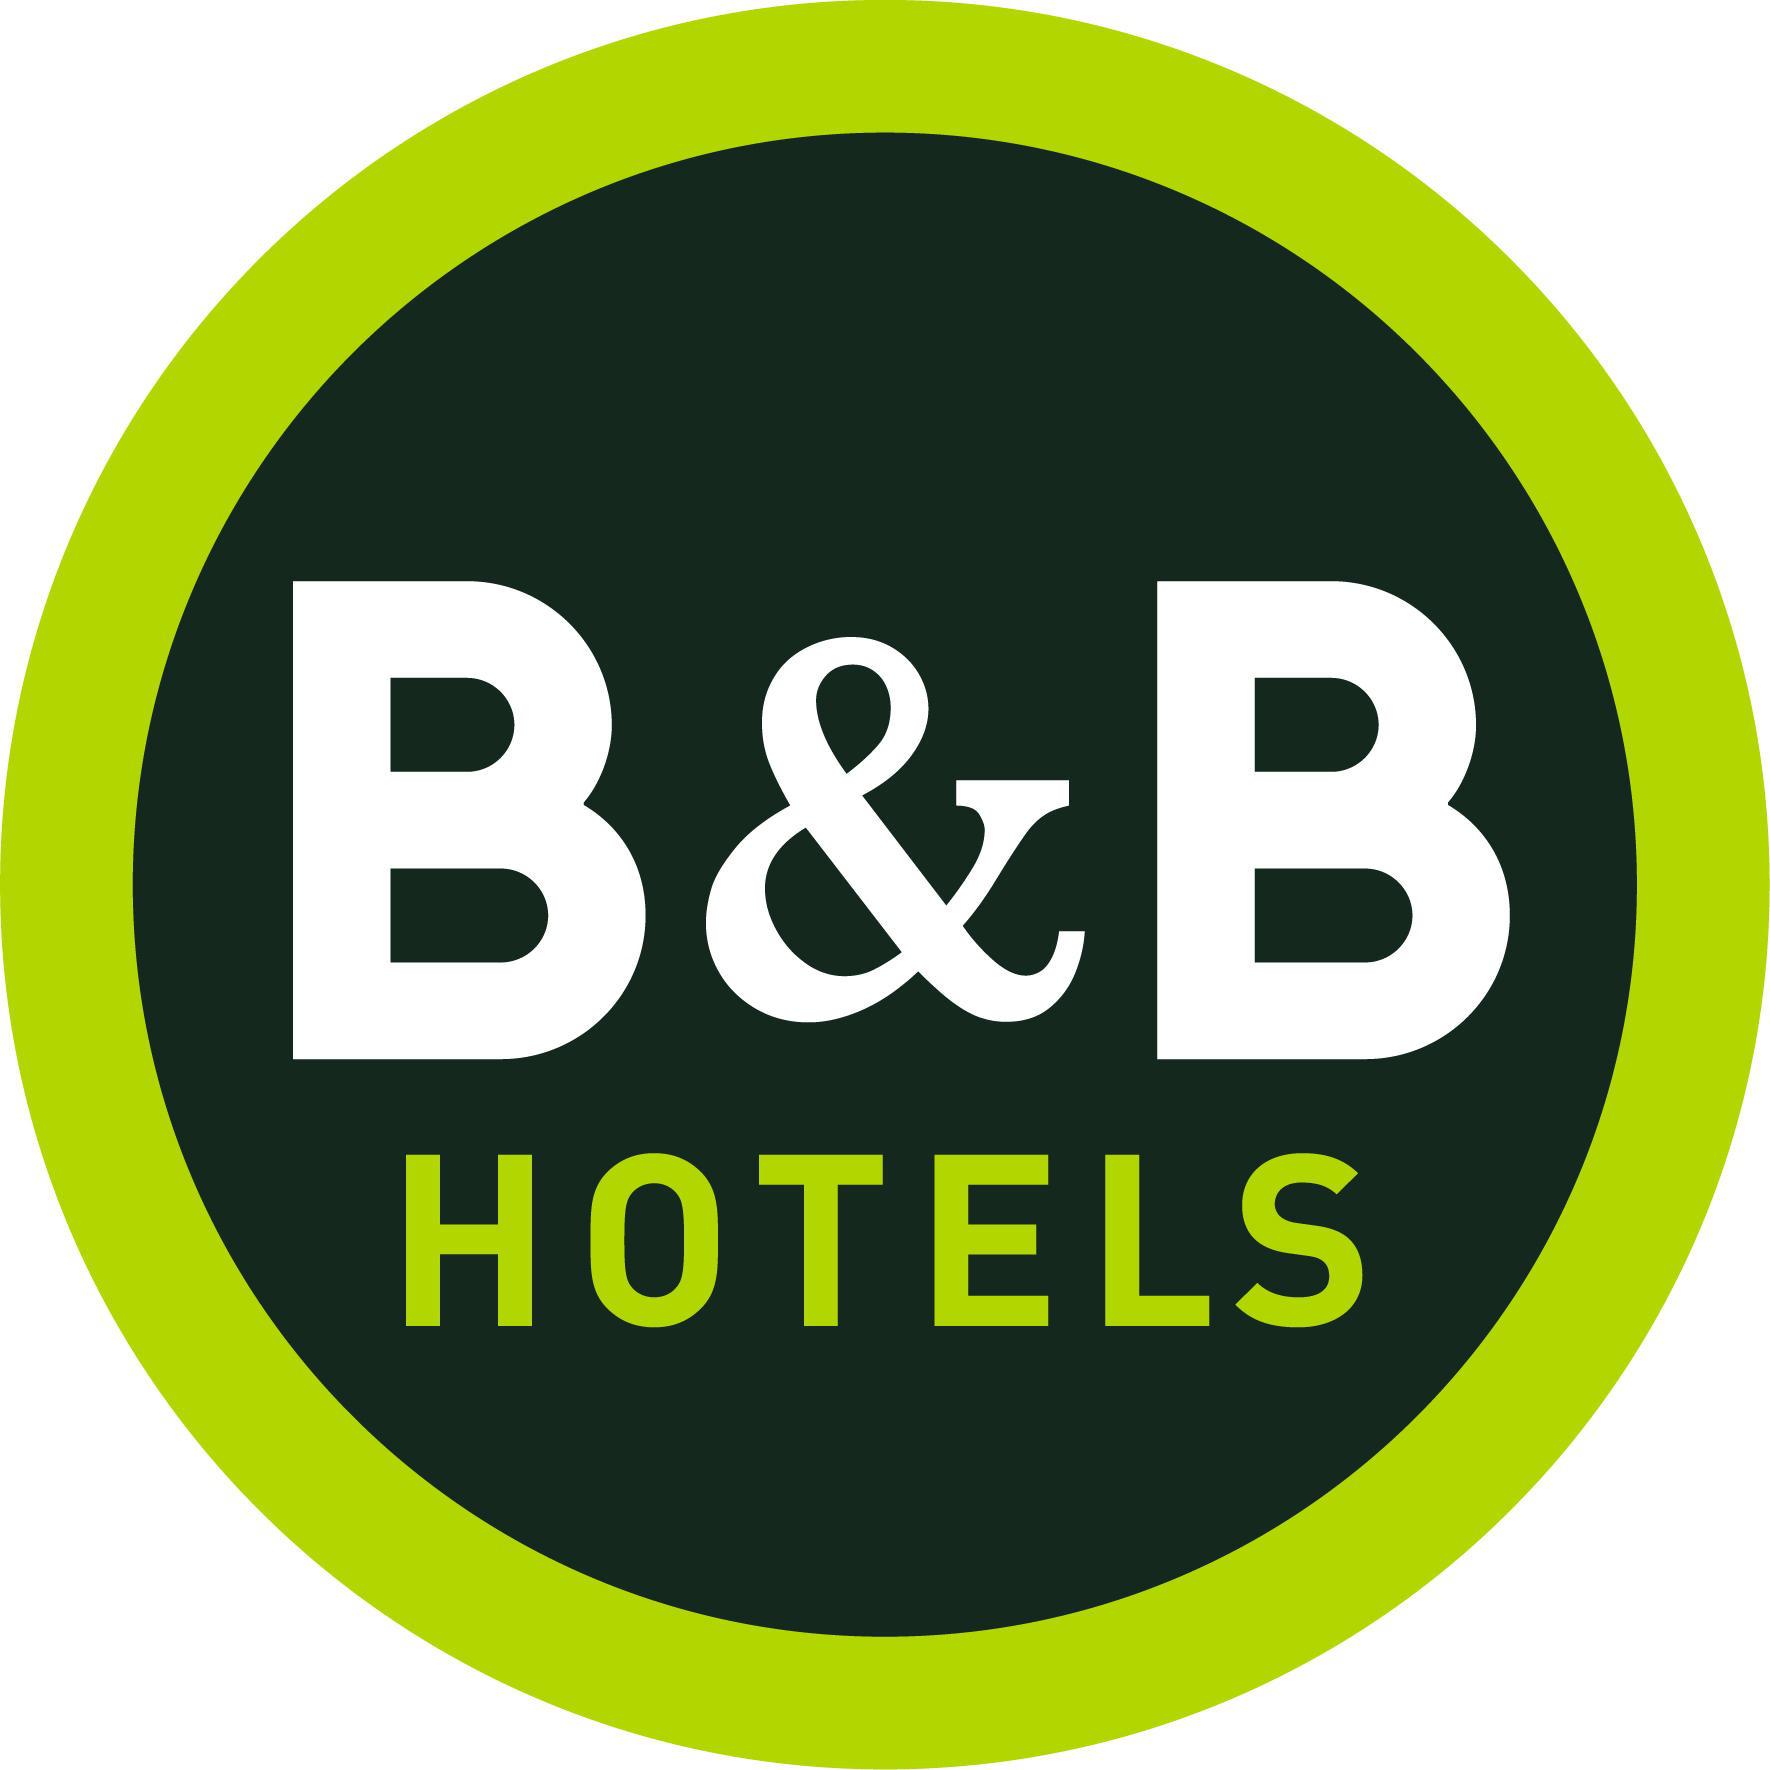 B&B HOTEL Potsdam in Potsdam - Logo